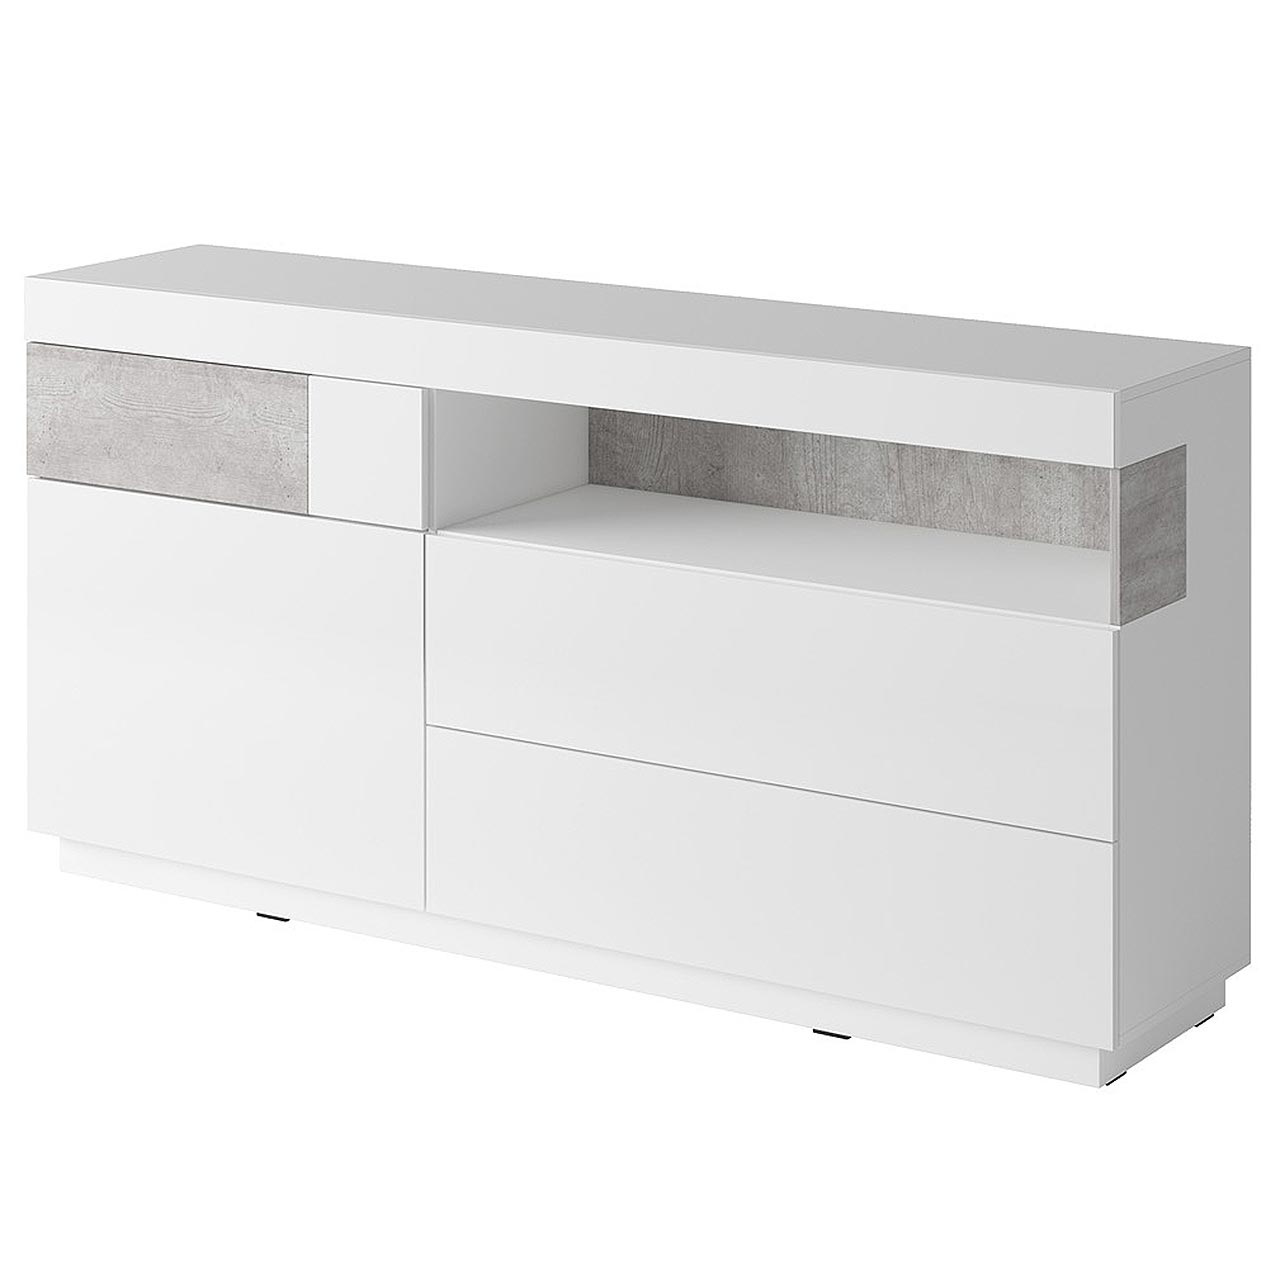 Storage cabinet SILKE SE47 white gloss / concrete